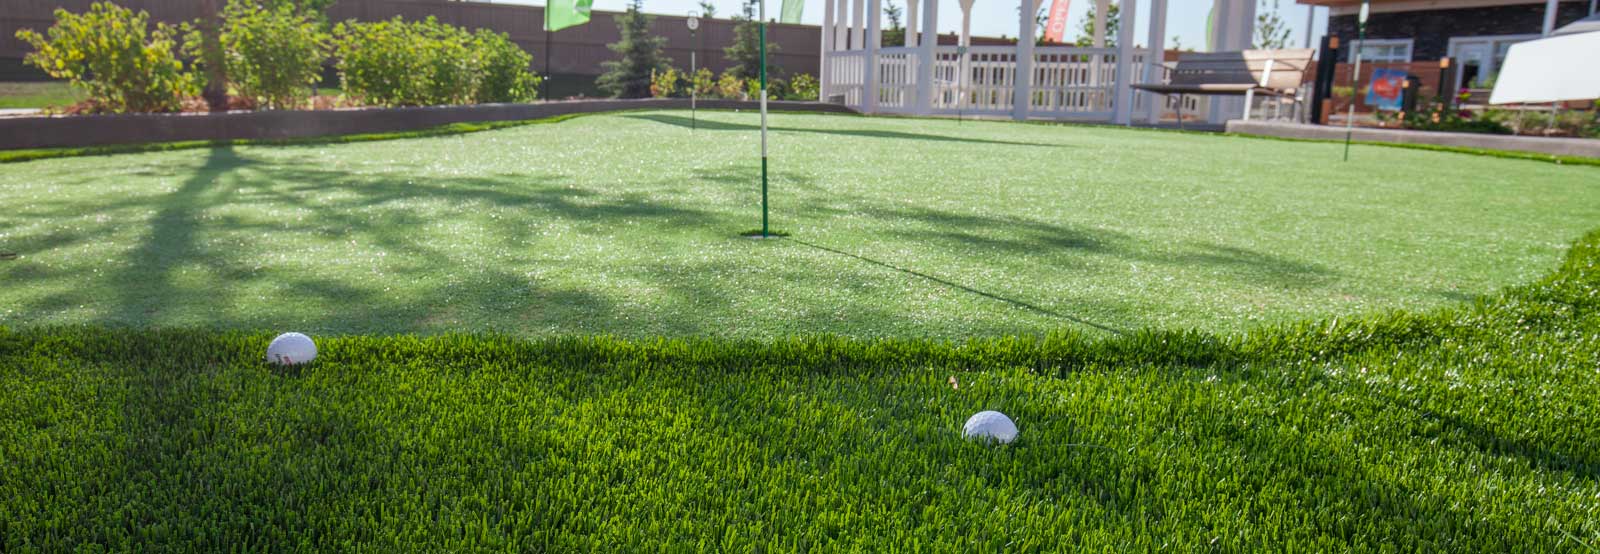 Artificial Turf Grass Edmonton | Backyard Golf Putting ...